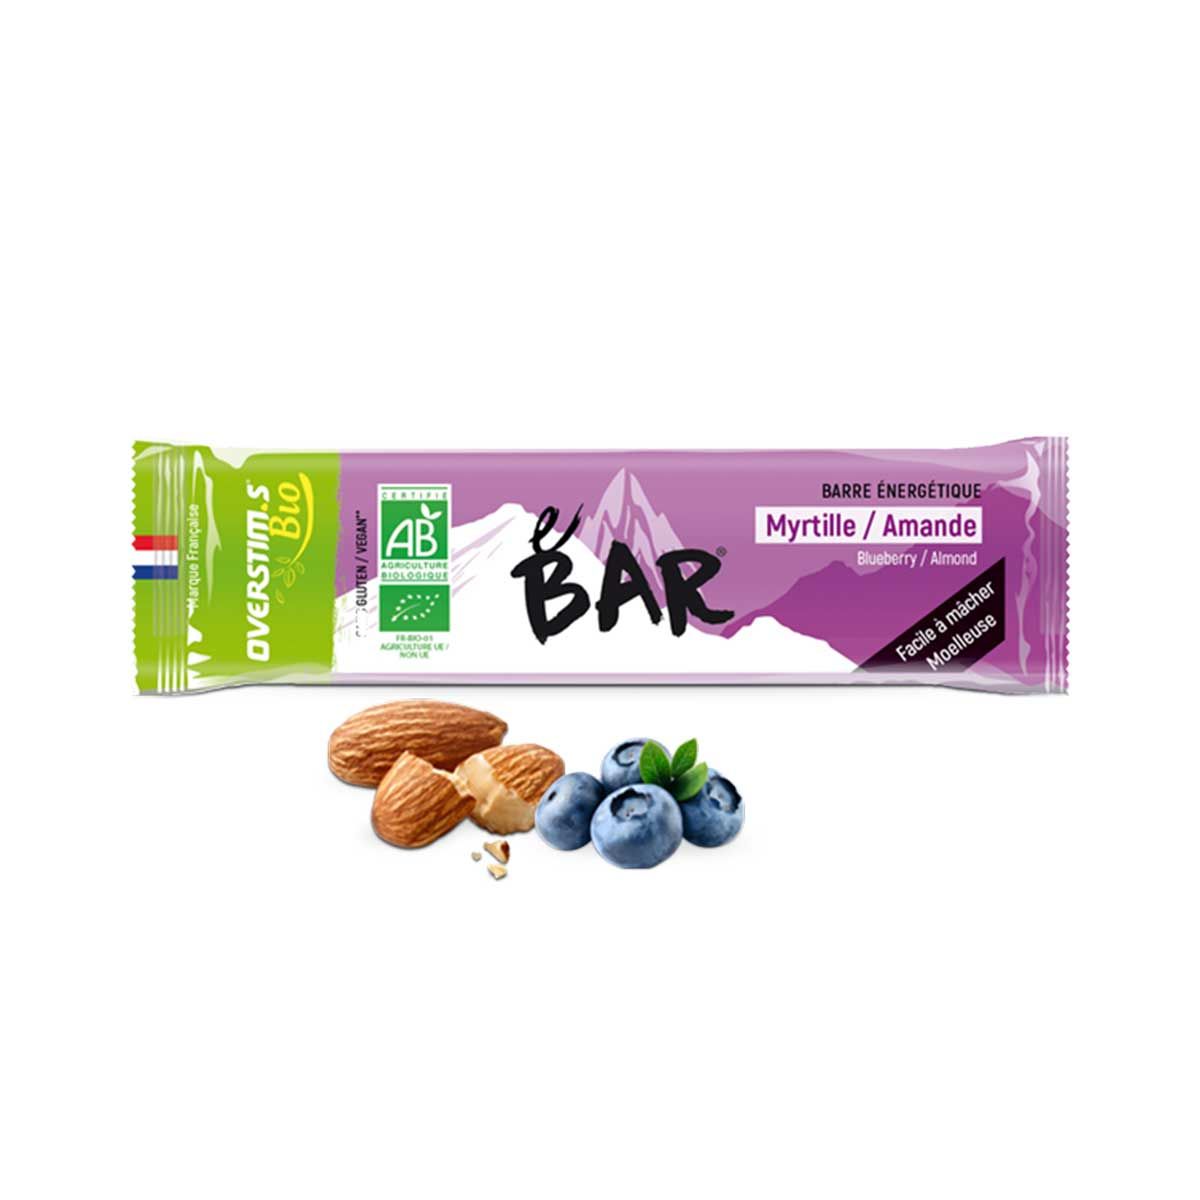 Overstim.s organic e-bar - Blueberry, Almond